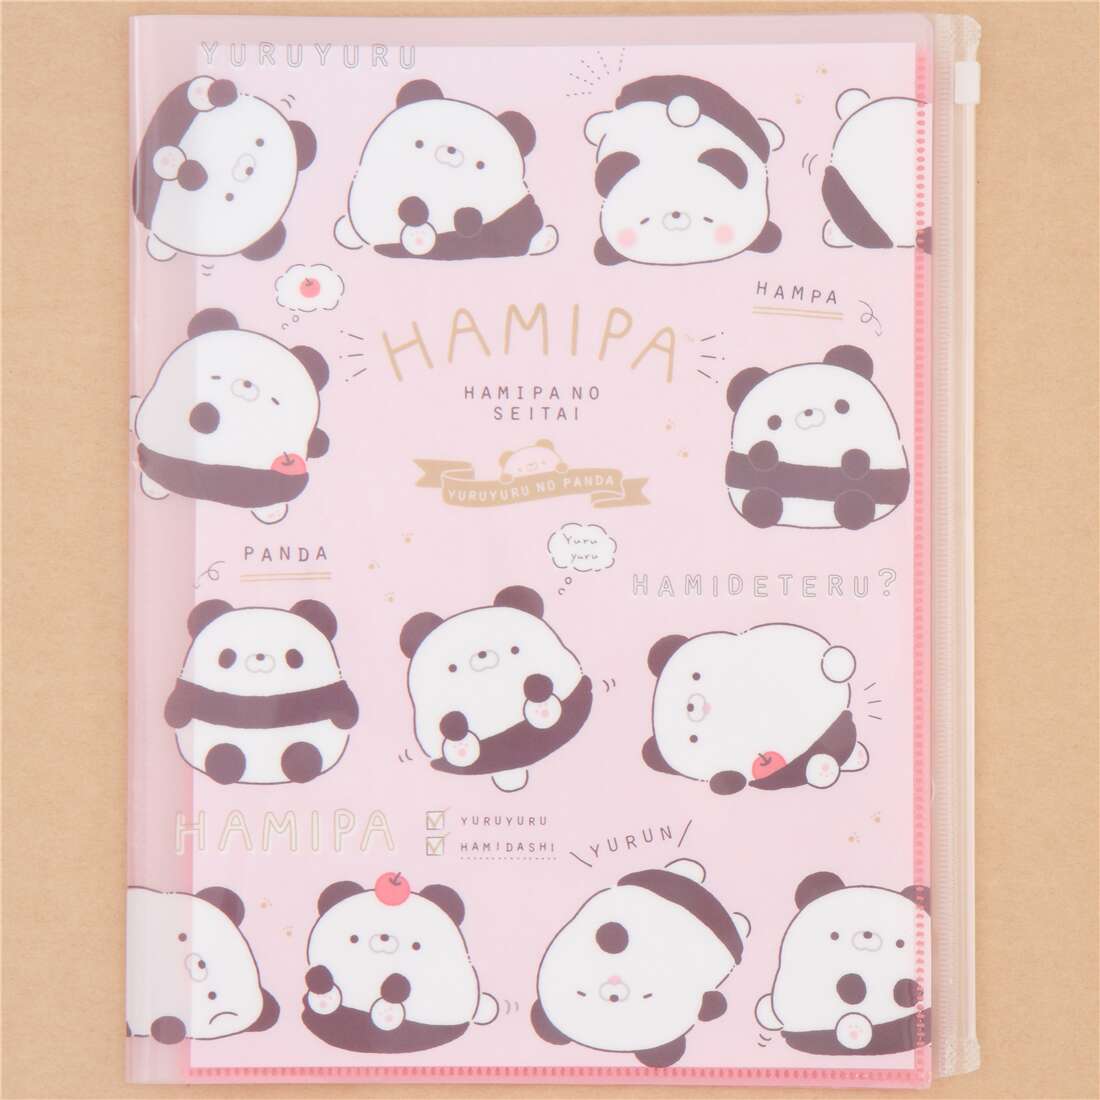 San-X Iiwaken Shiba Inu A4 Plastic File Folder ~KAWAII!!! Pink